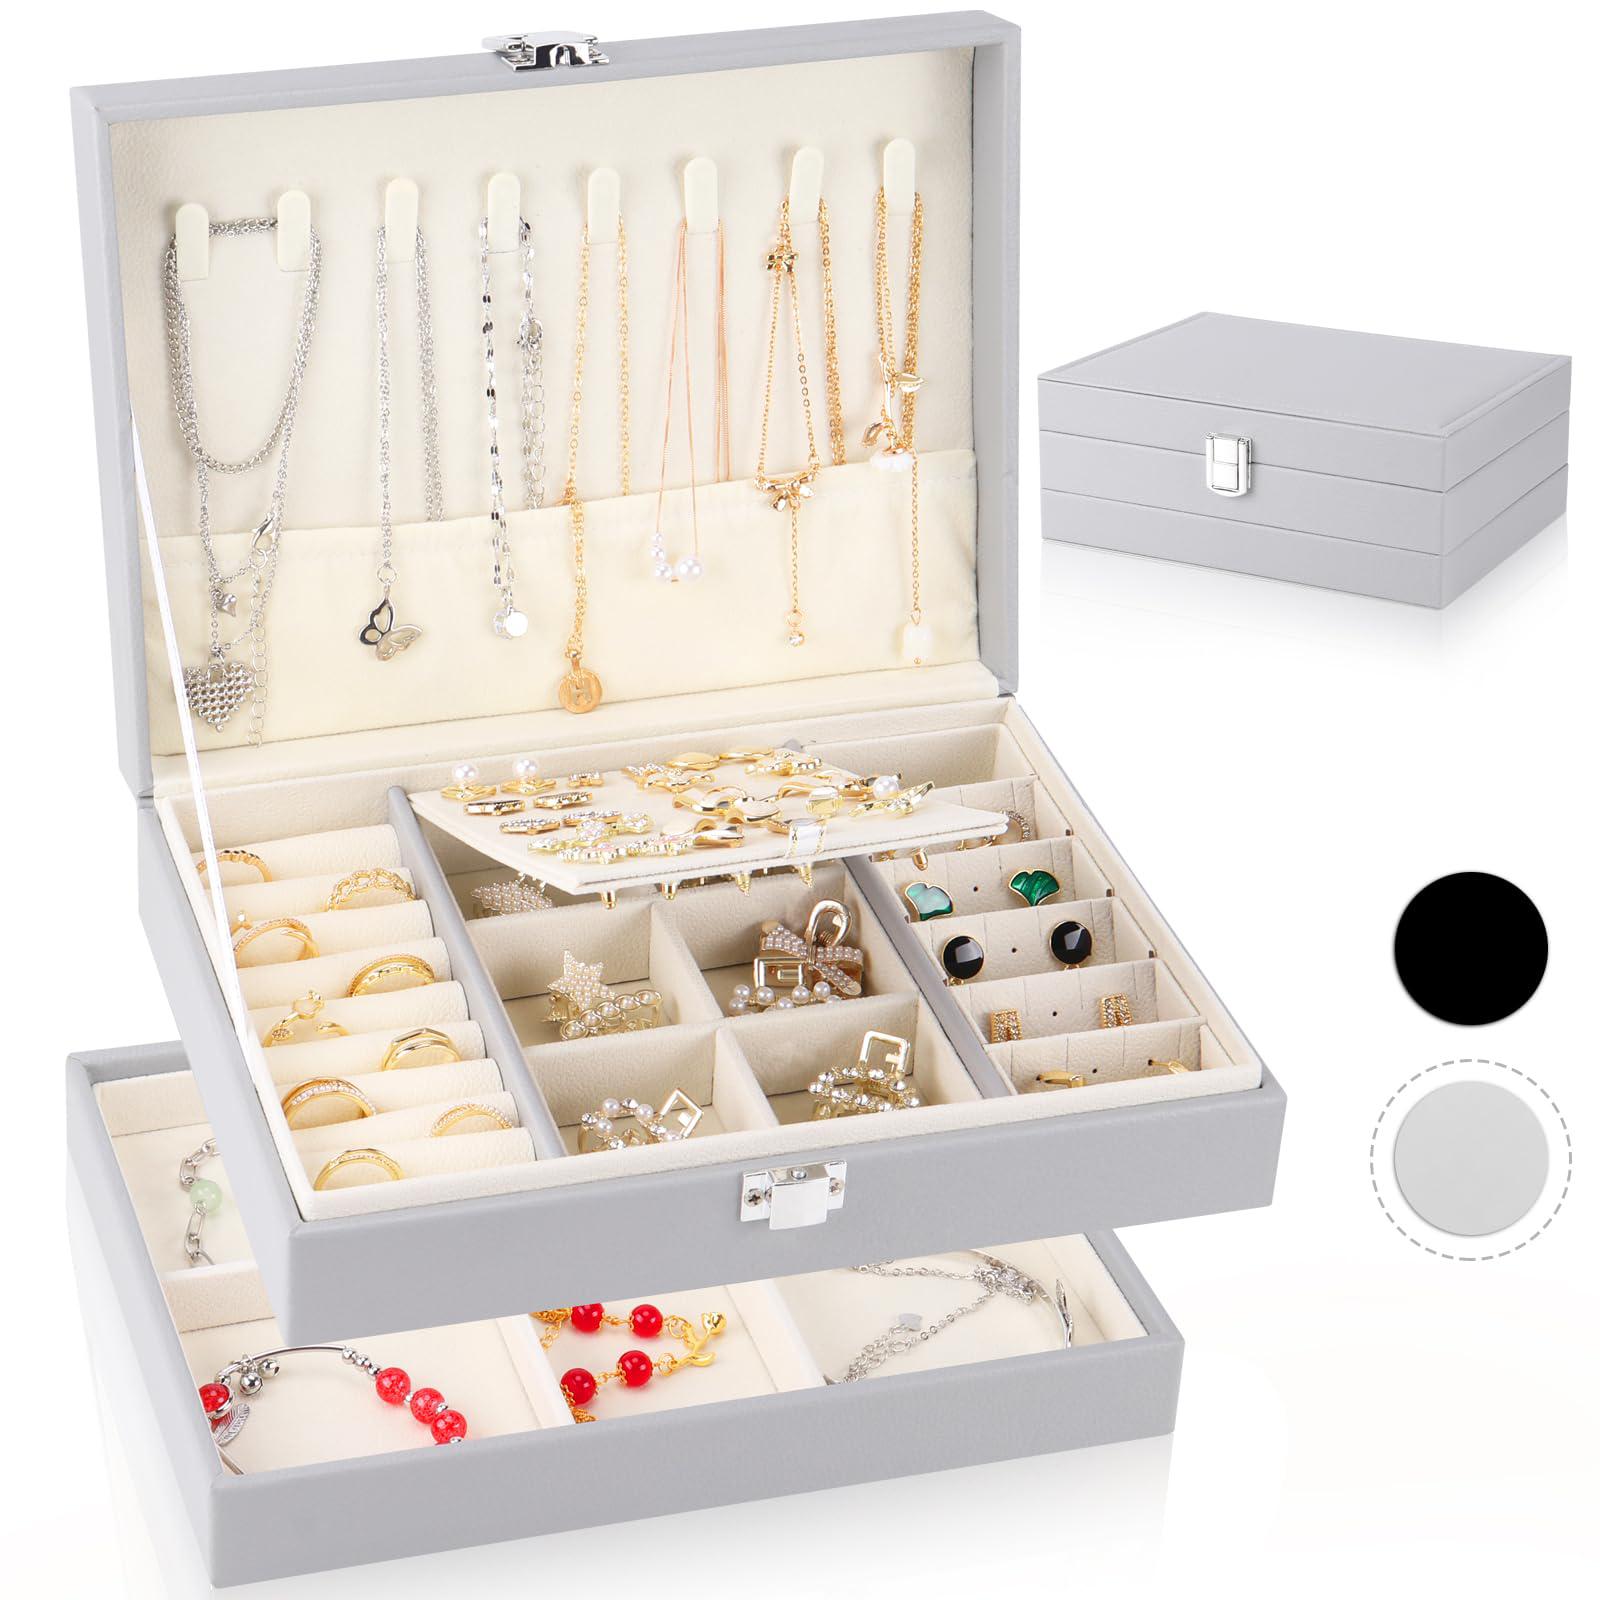 lomeve jewelry box with removable tray, pu leather jewelry box organizer for women girls, 2 layers jewelry organizer box for 